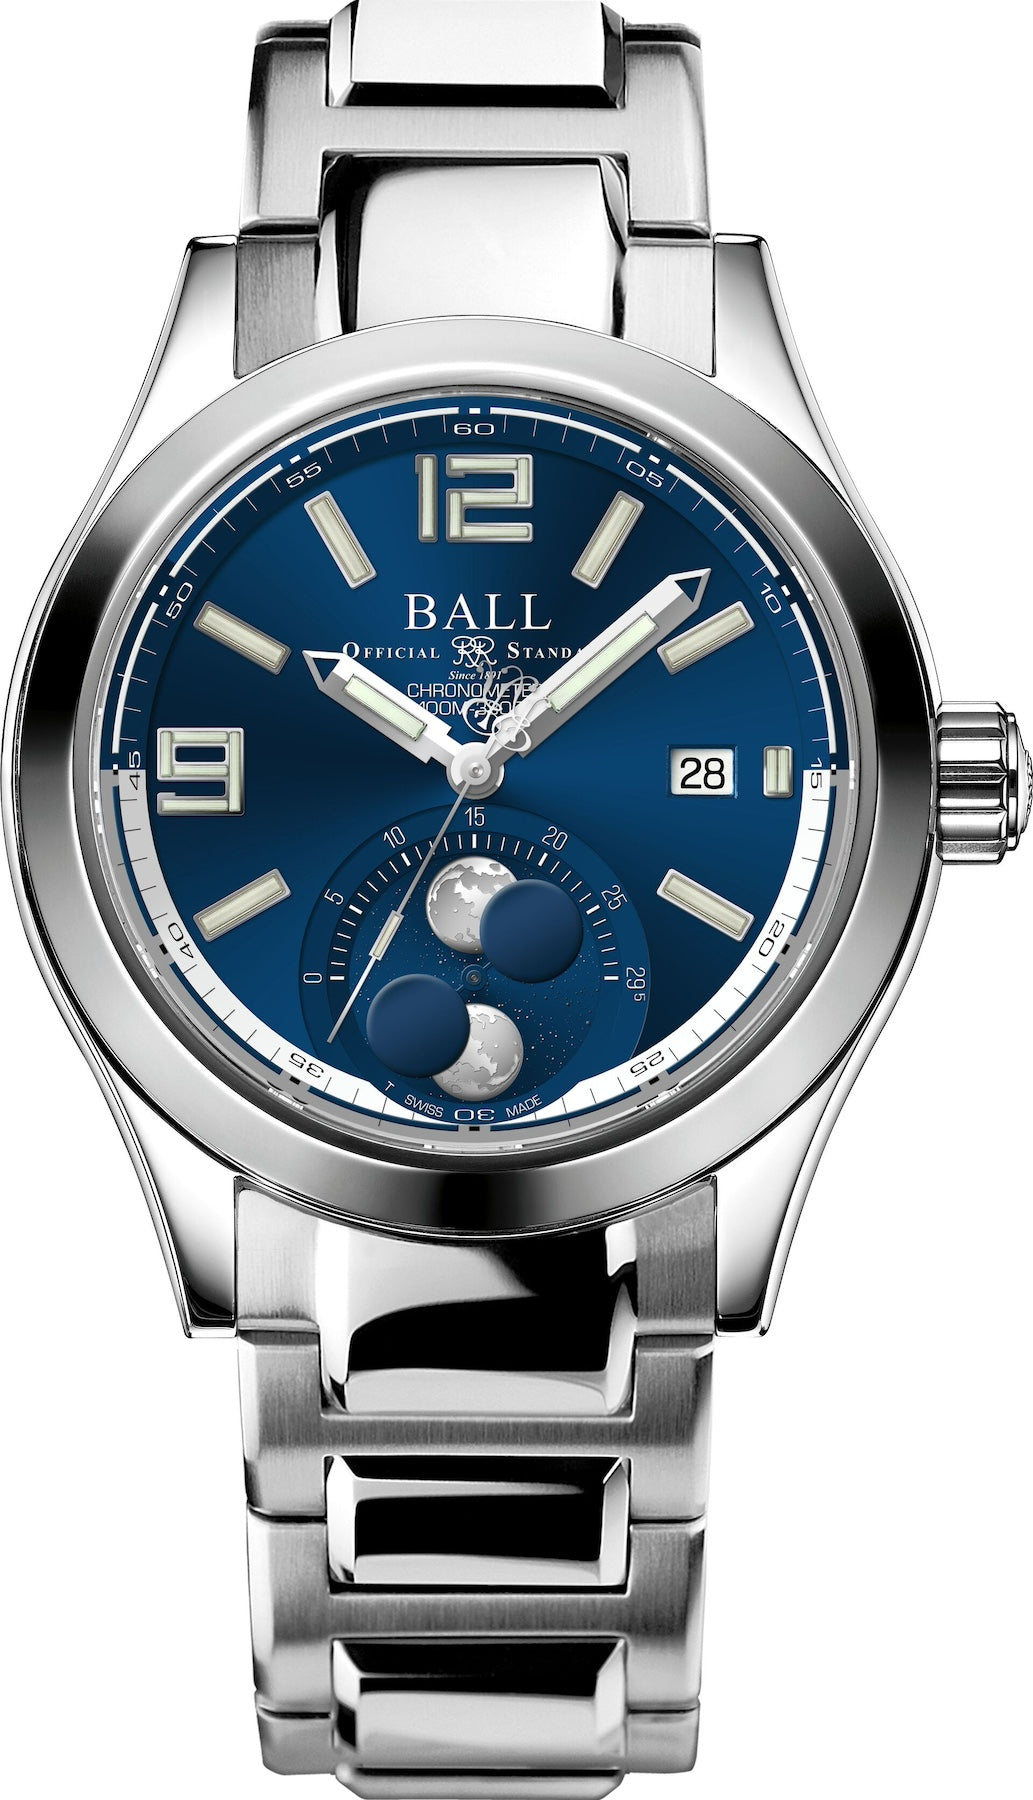 Photos - Wrist Watch Ball Watch Company Engineer II Moon Phase Chronometer Limited Edition Pre 